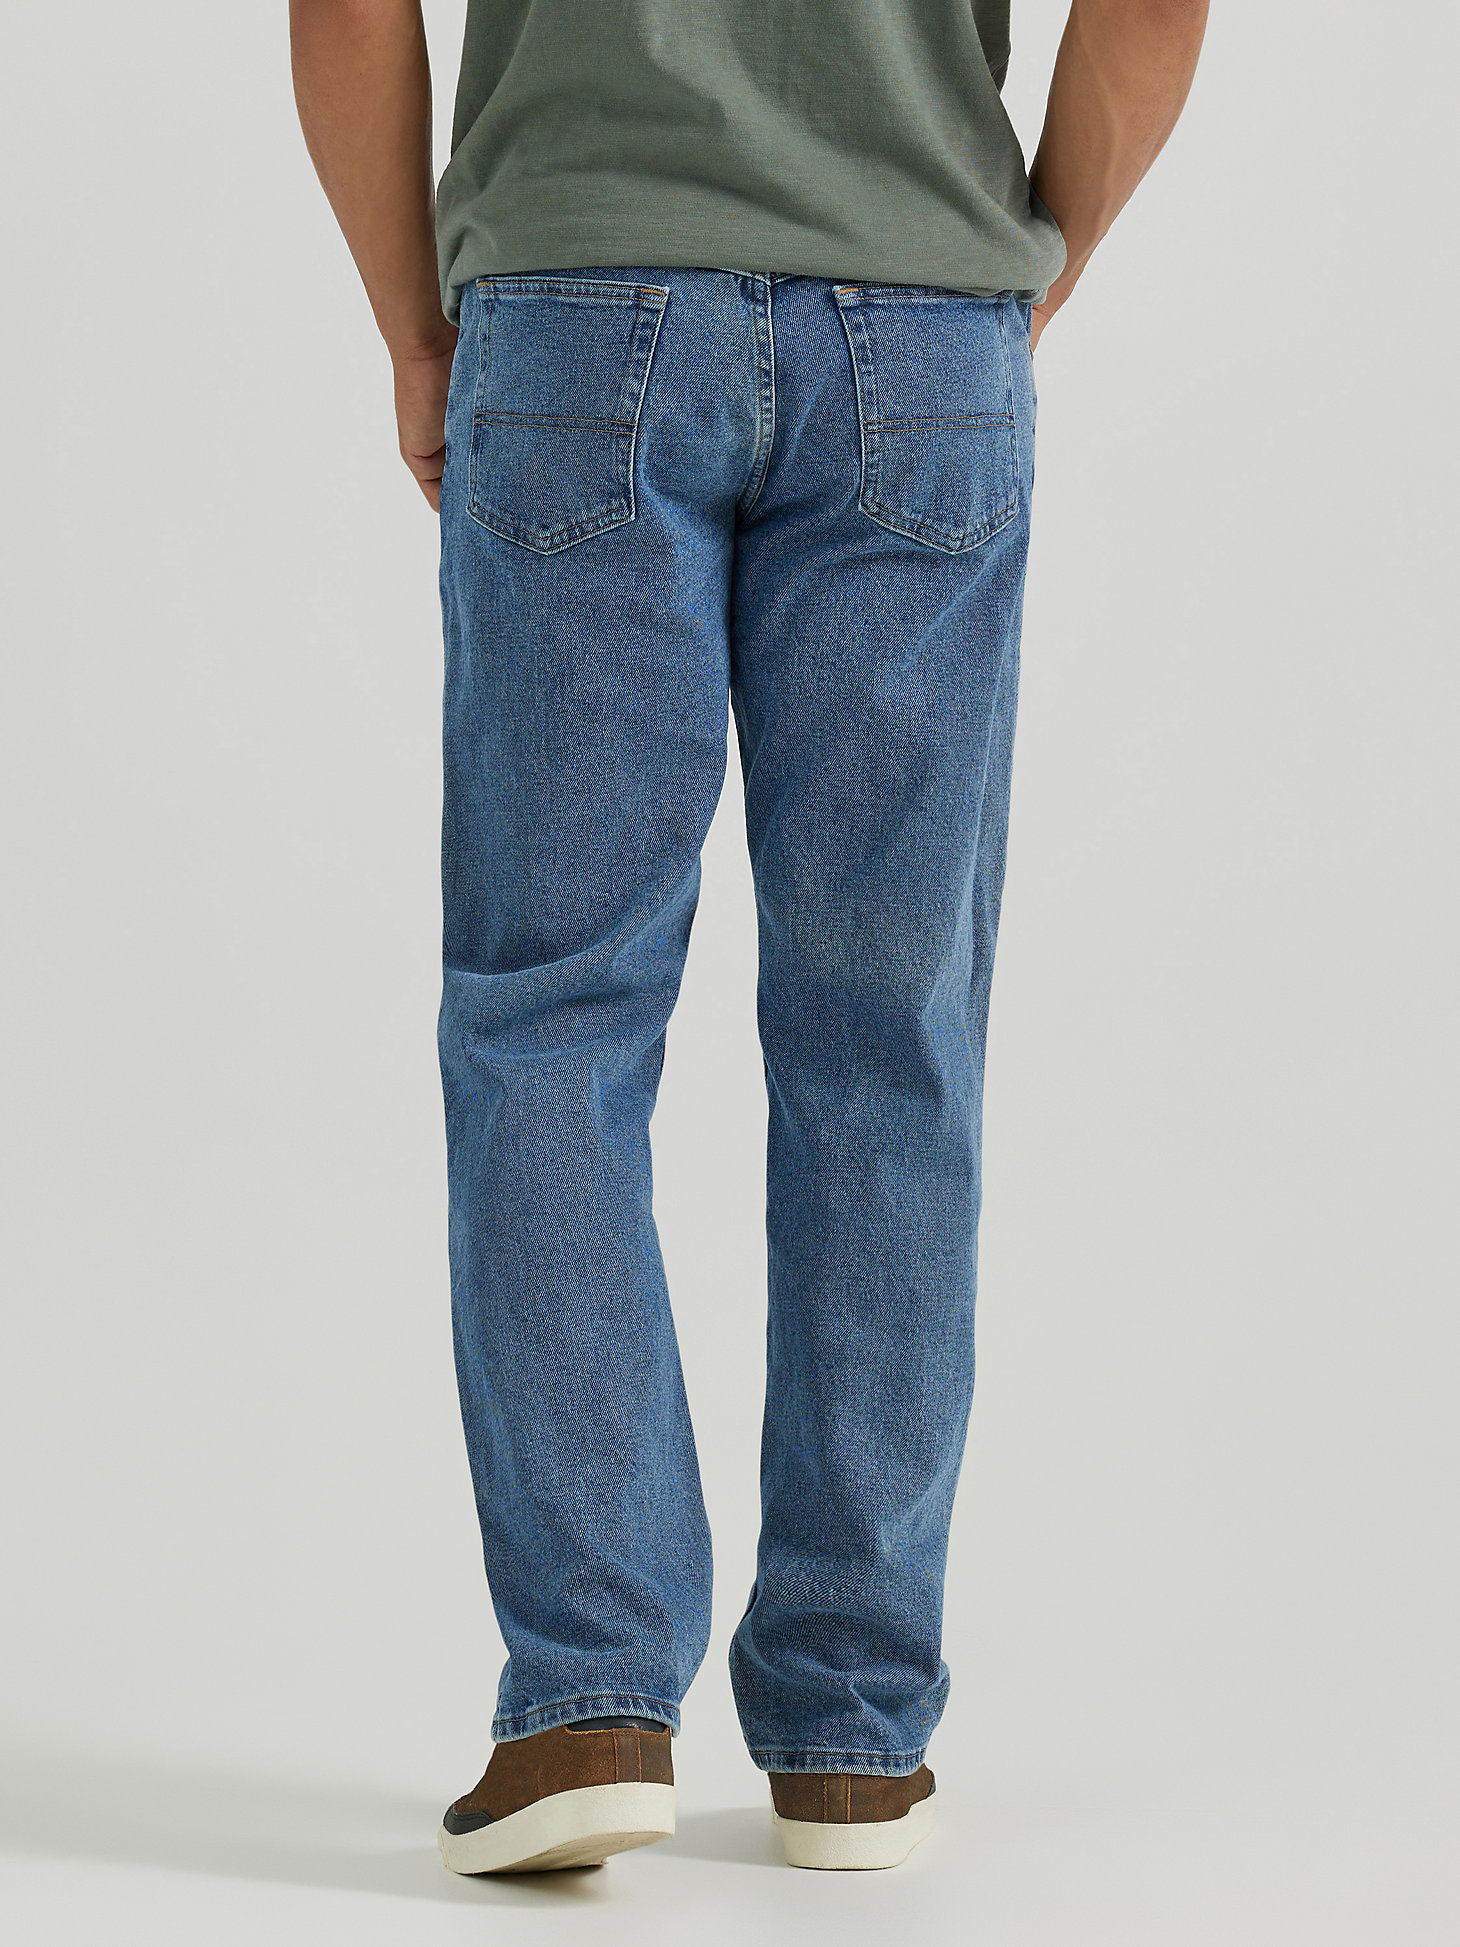 Men's Wrangler Authentics® Relaxed Fit Flex Jean in Vintage Blue alternative view 1